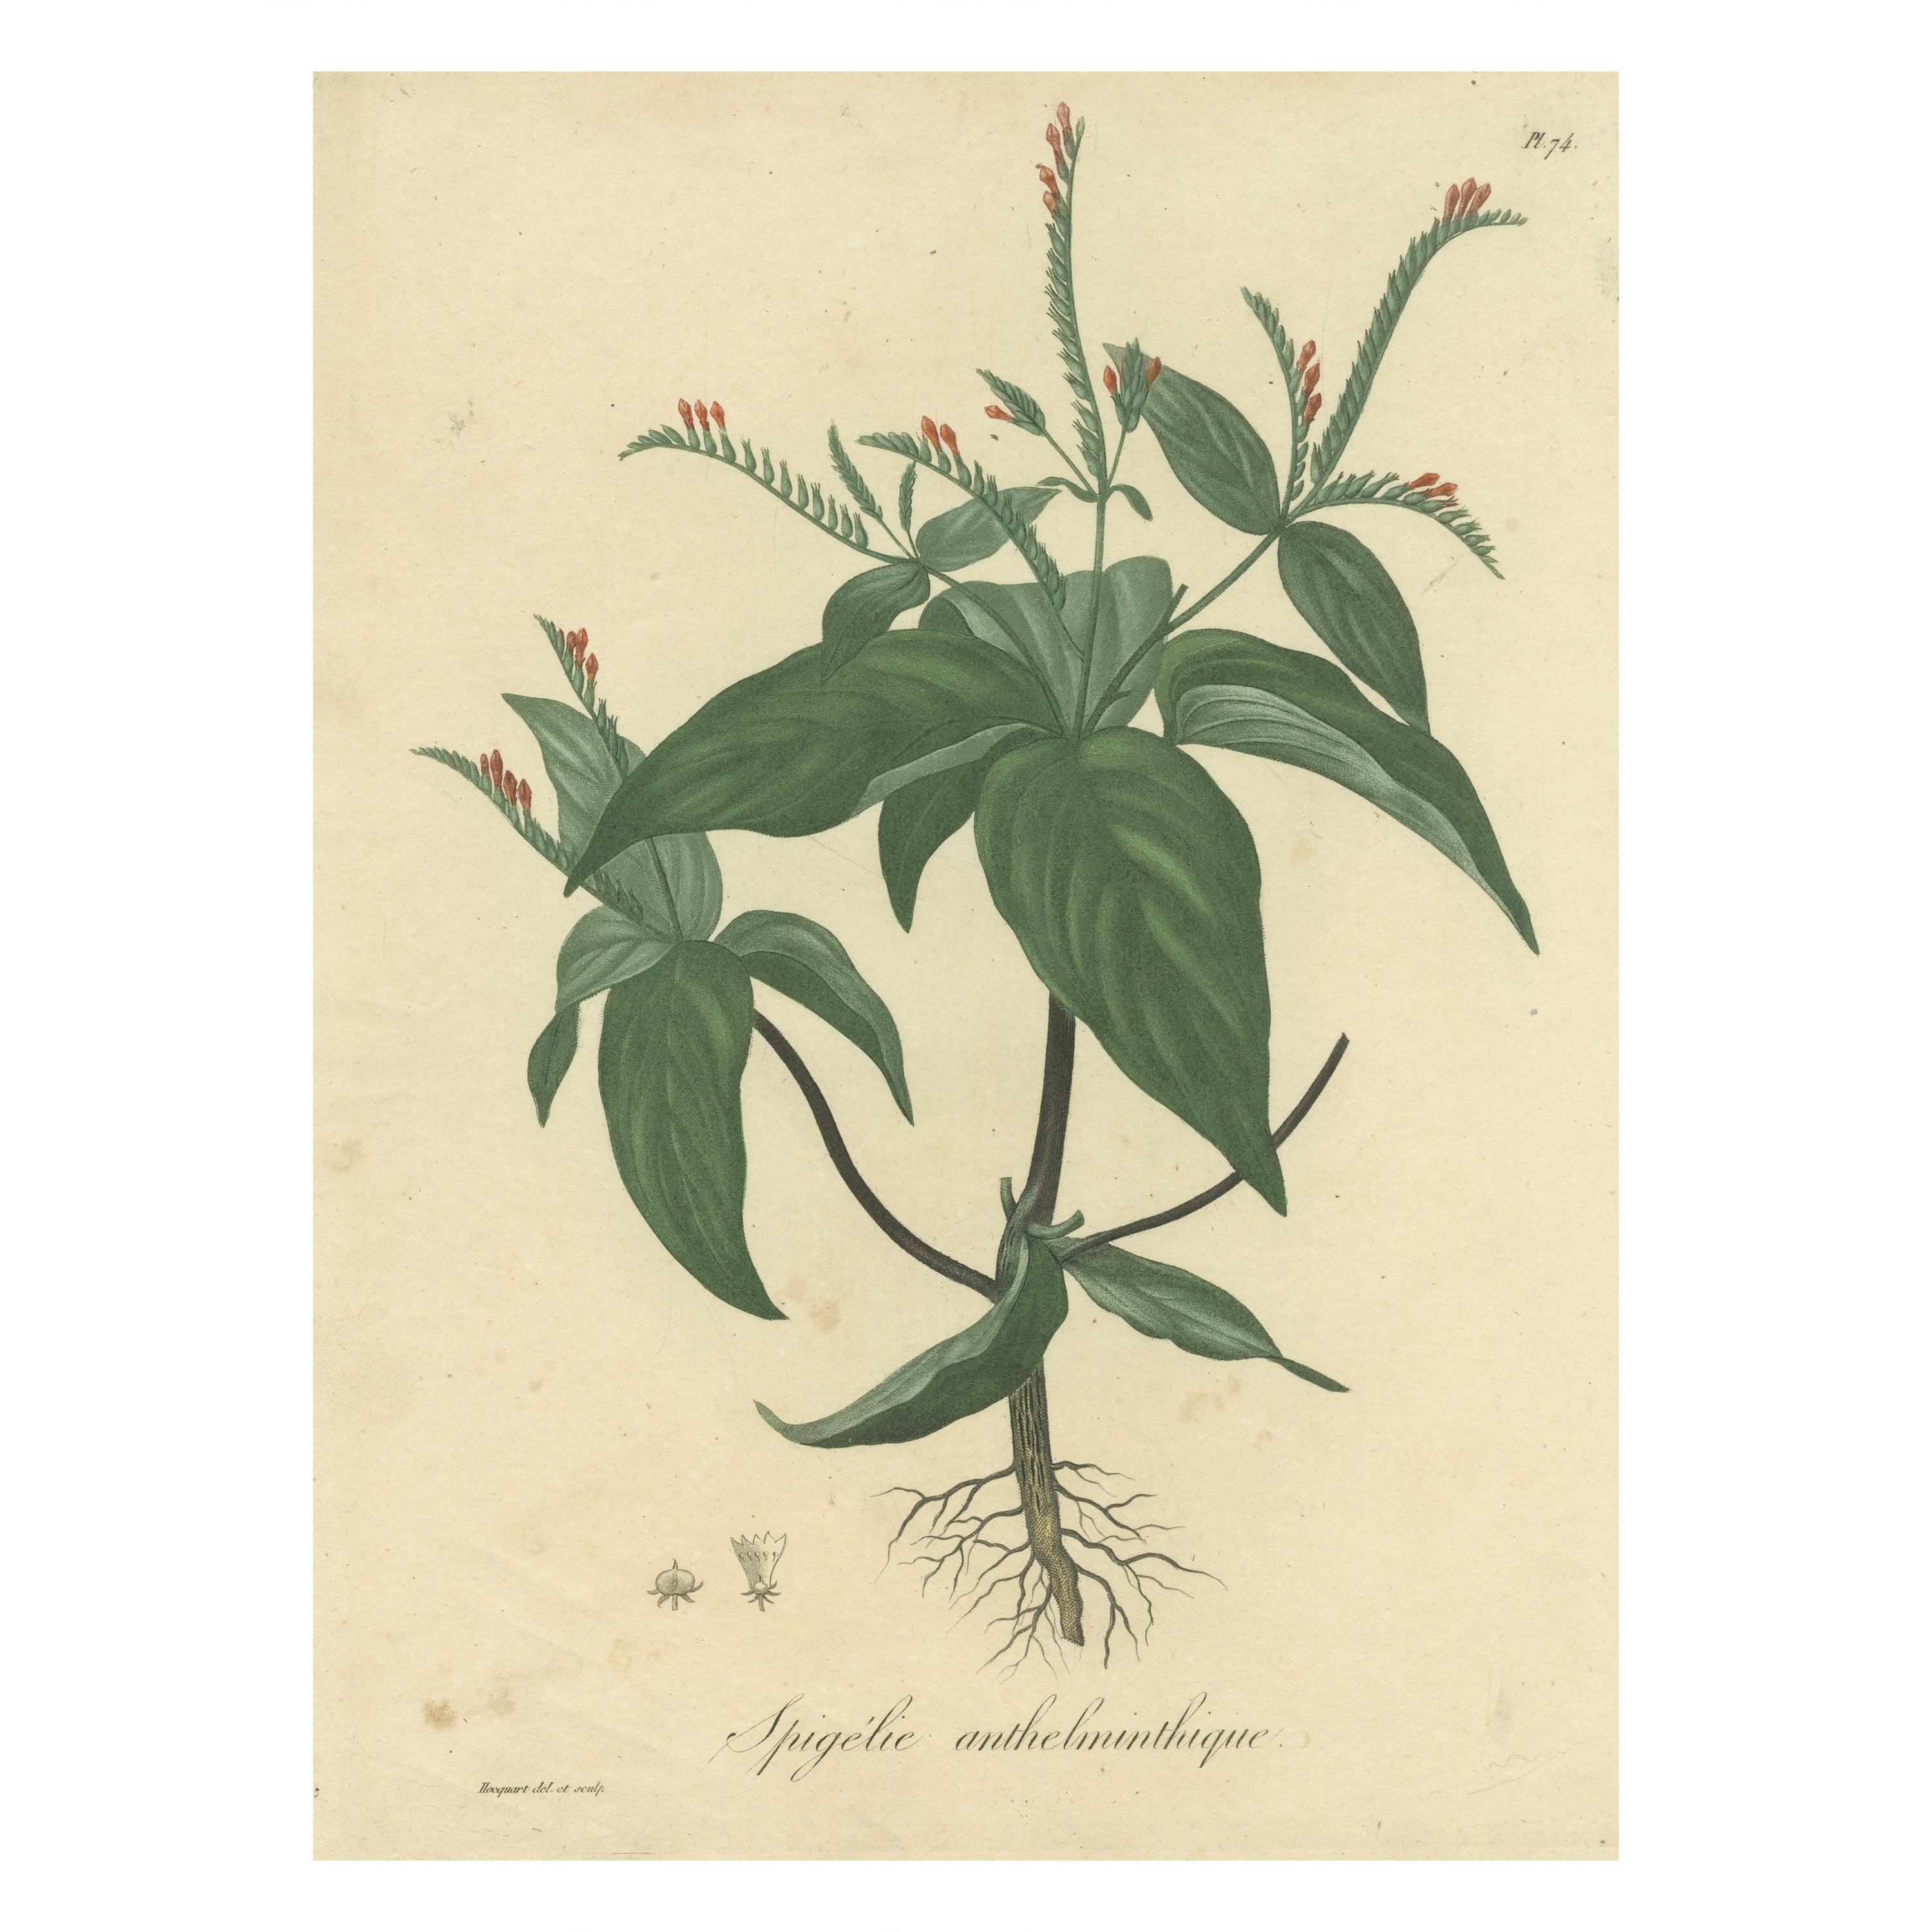 Floral Elegance of the Americas: A Botanical Print of a Spigelia Species, c.1821